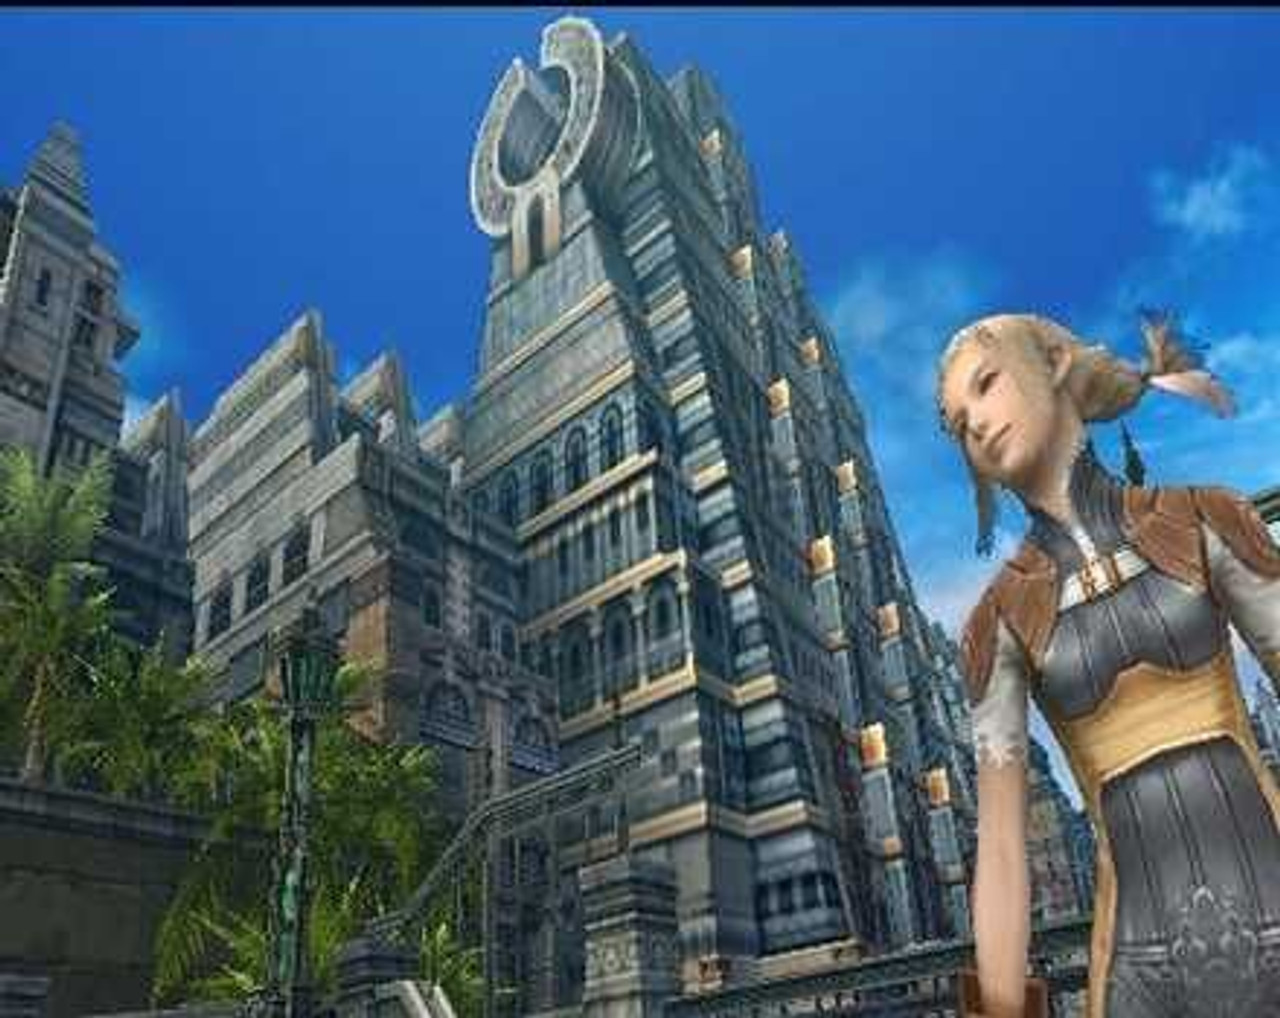 Final Fantasy XII : Square Enix LLC: Video Games 